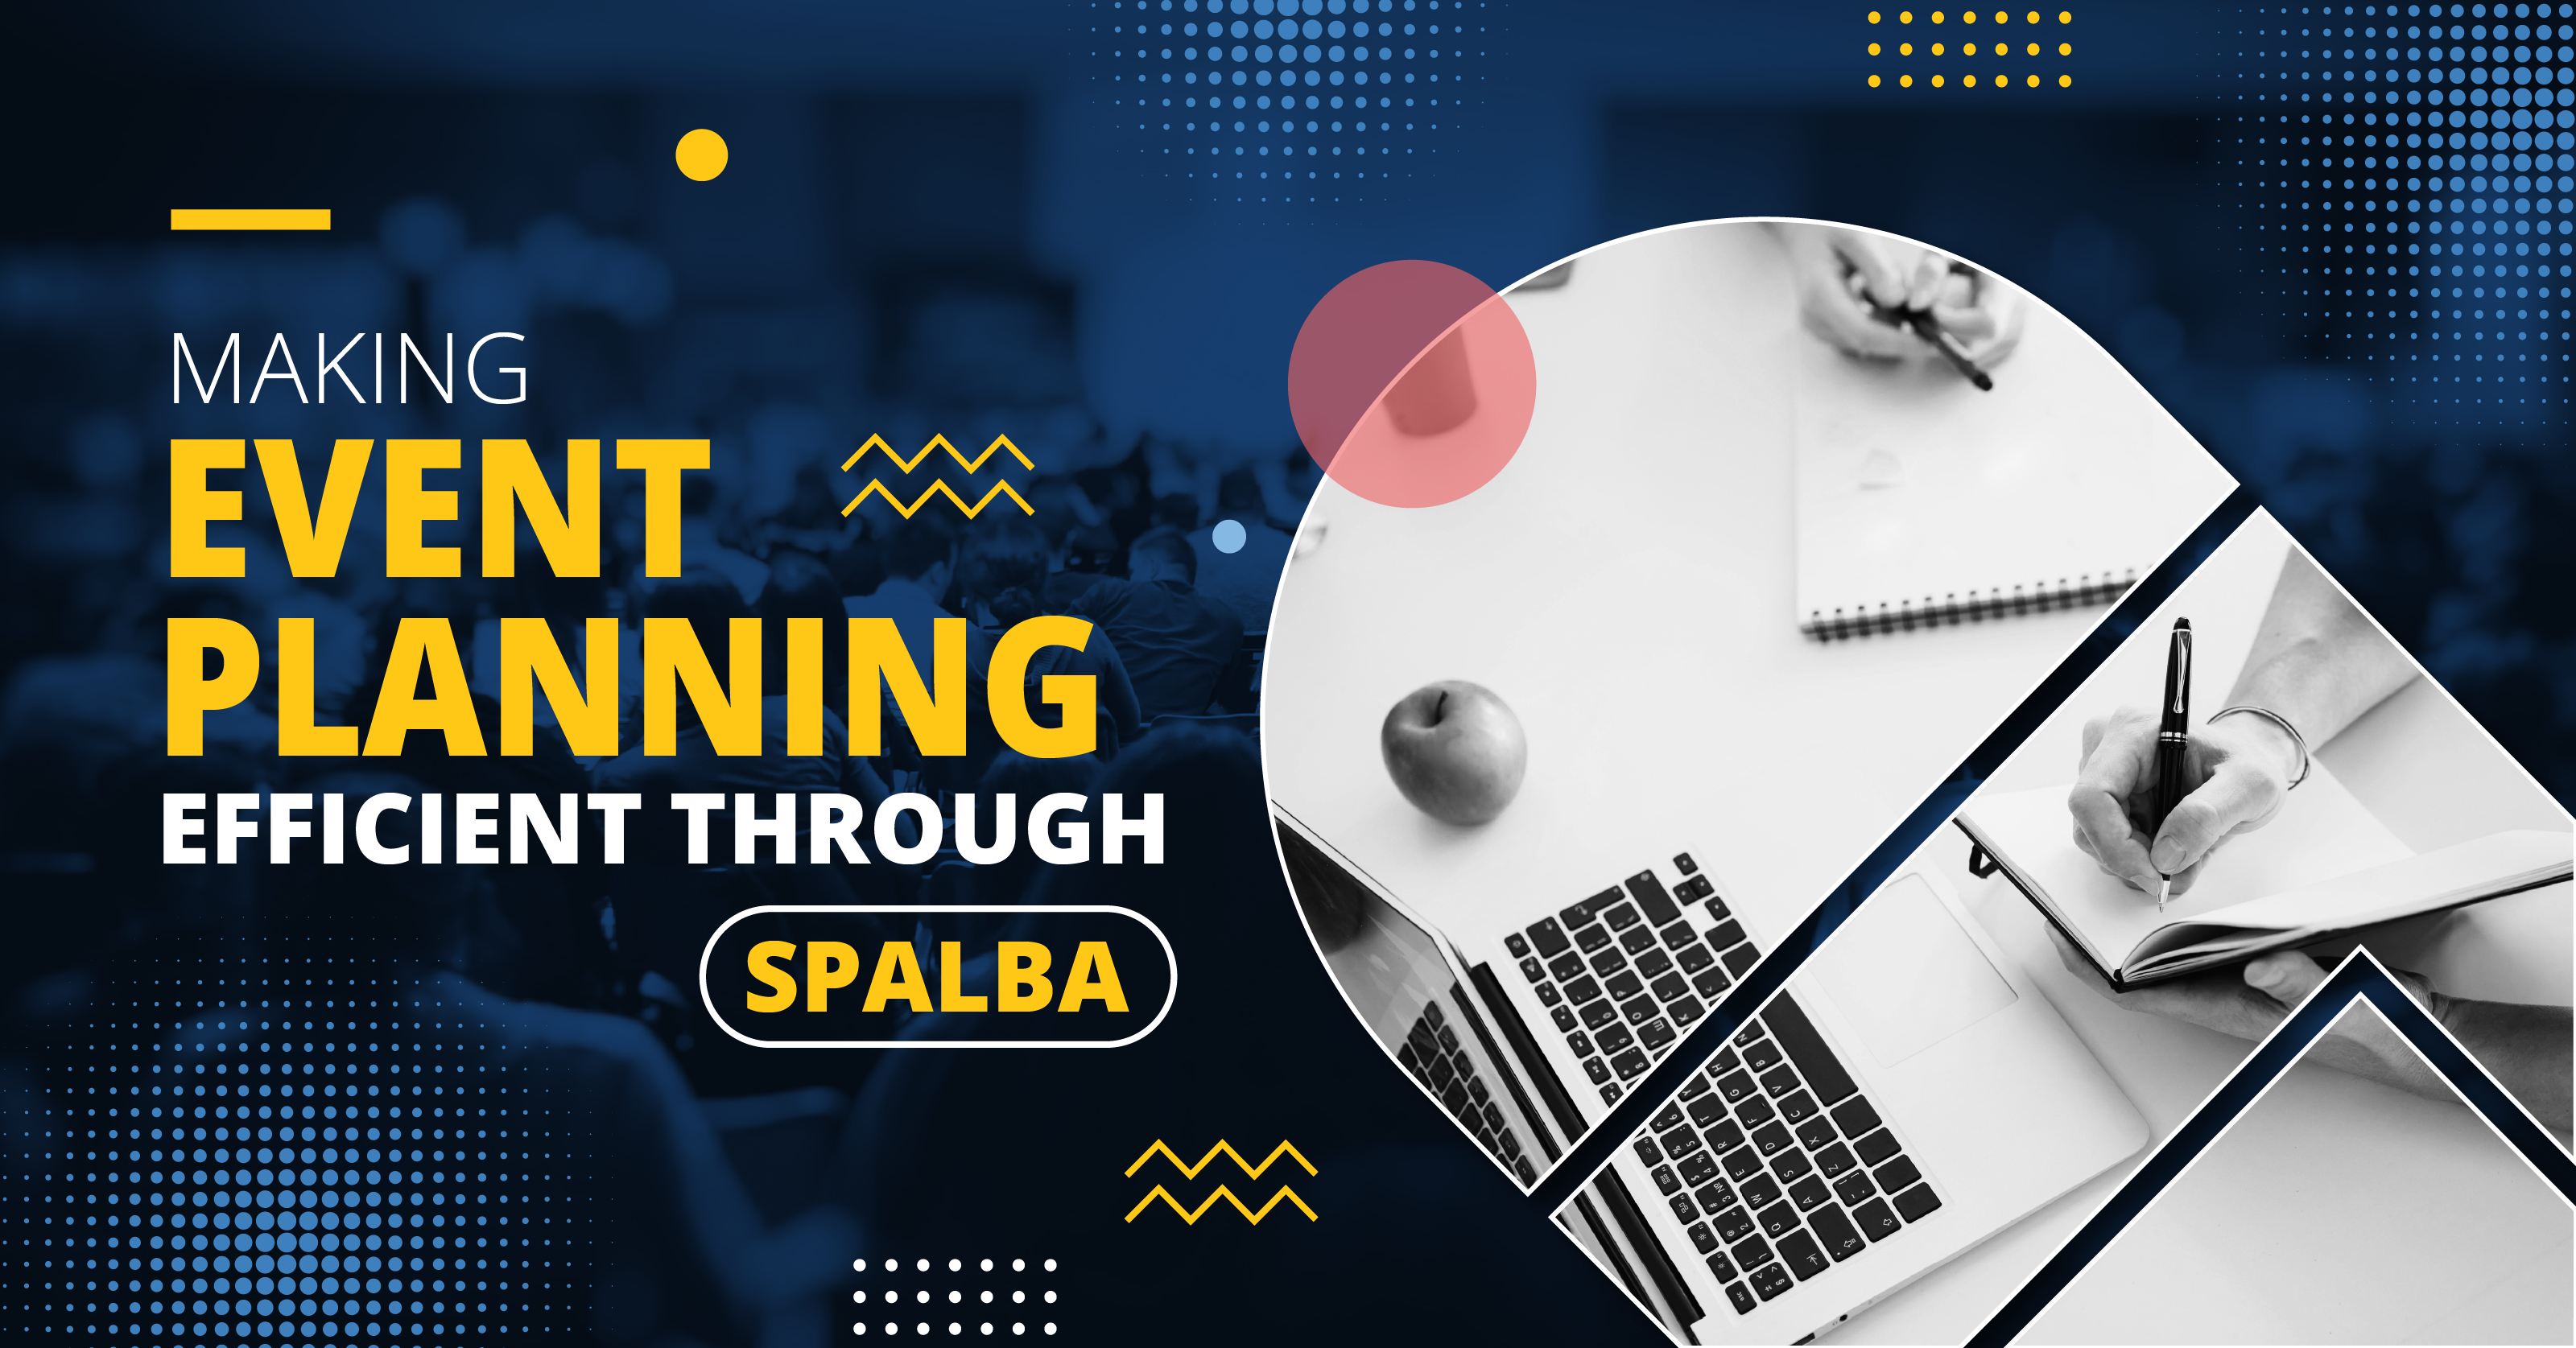 Spalba: Boosting Event Planning Efficiency through
							‘SaaSification’